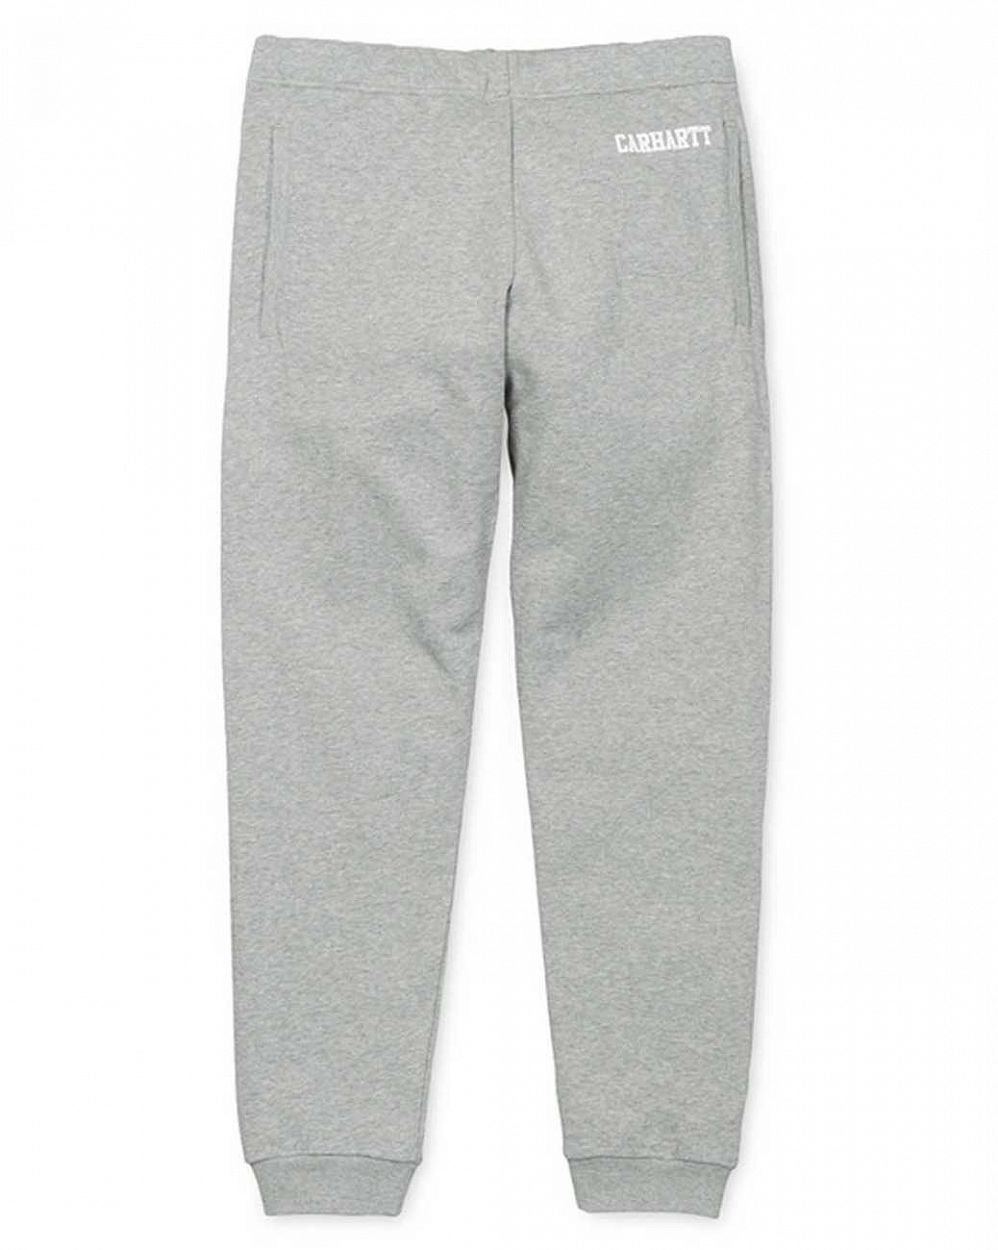 Спортивные штаны на резинке Carhartt WIP College Sweat Pant Grey отзывы